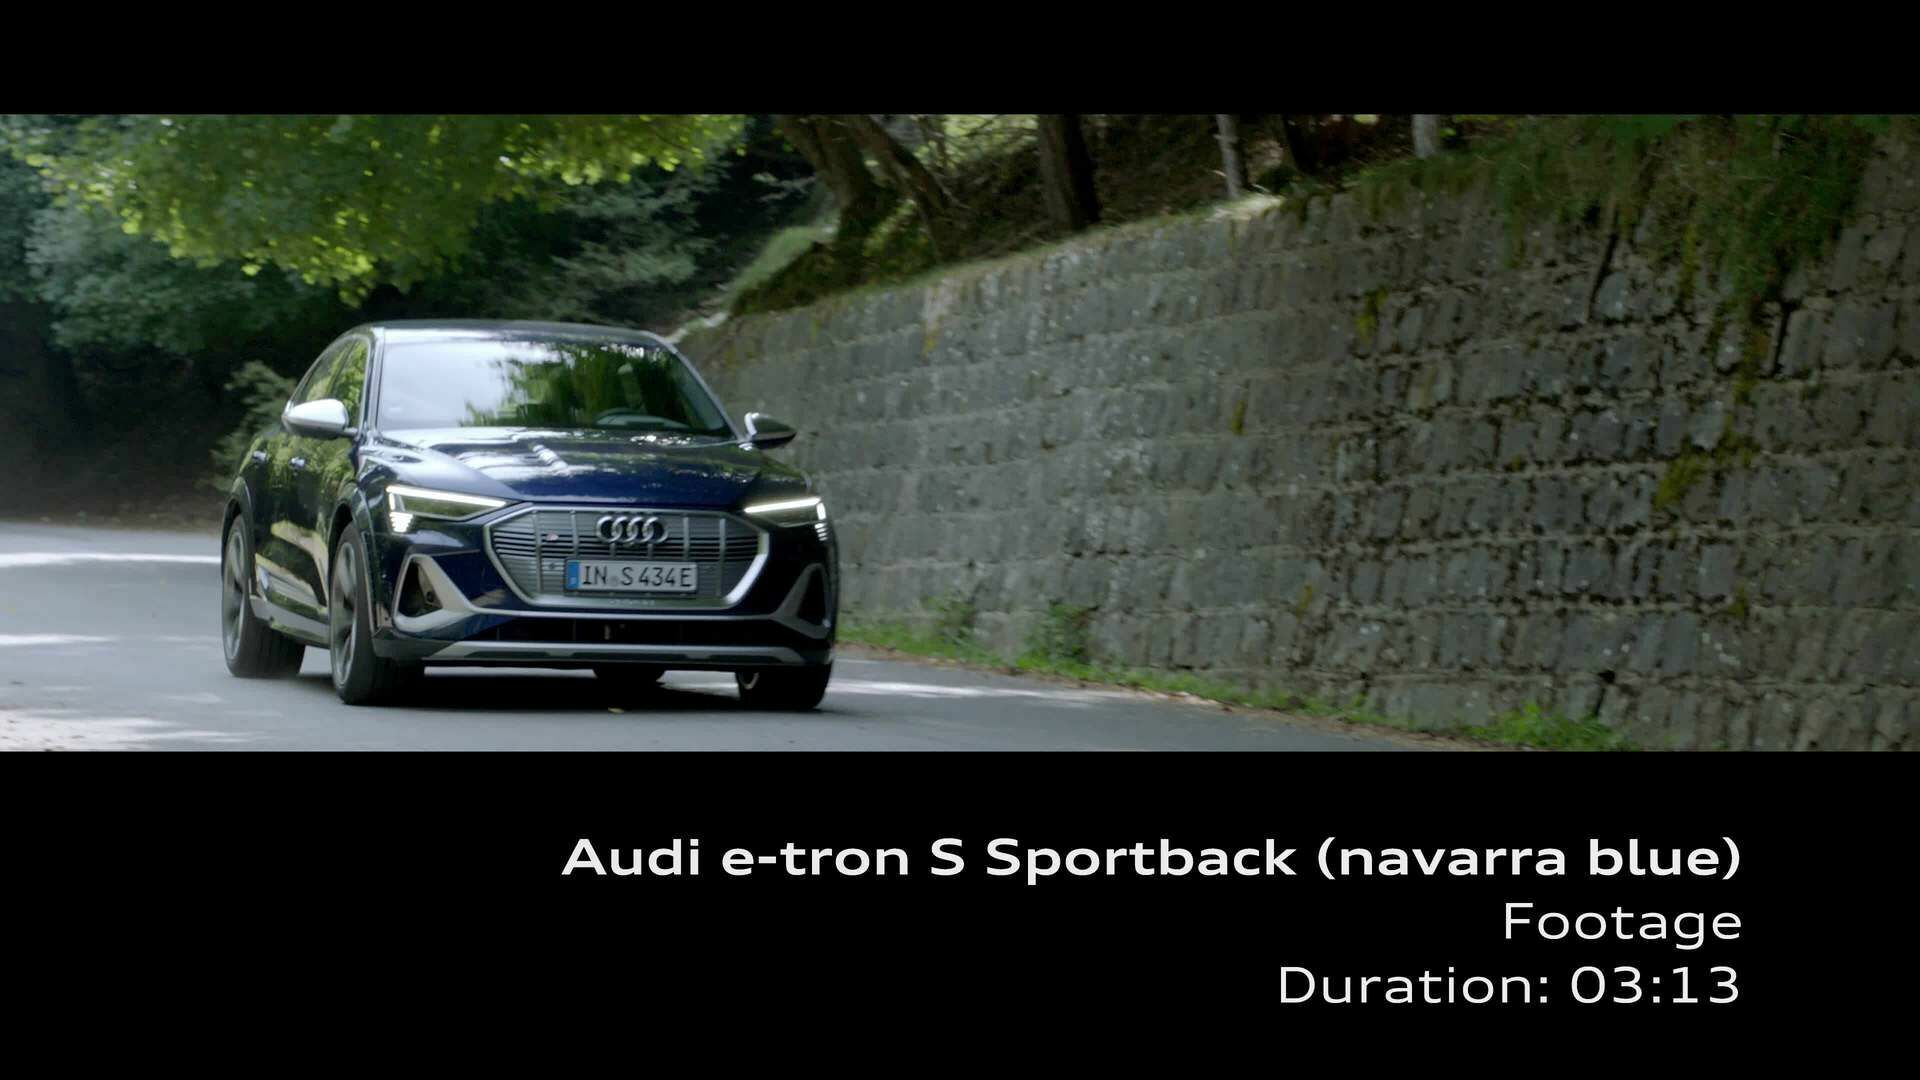 Footage: Audi e-tron S Sportback Navarra blue